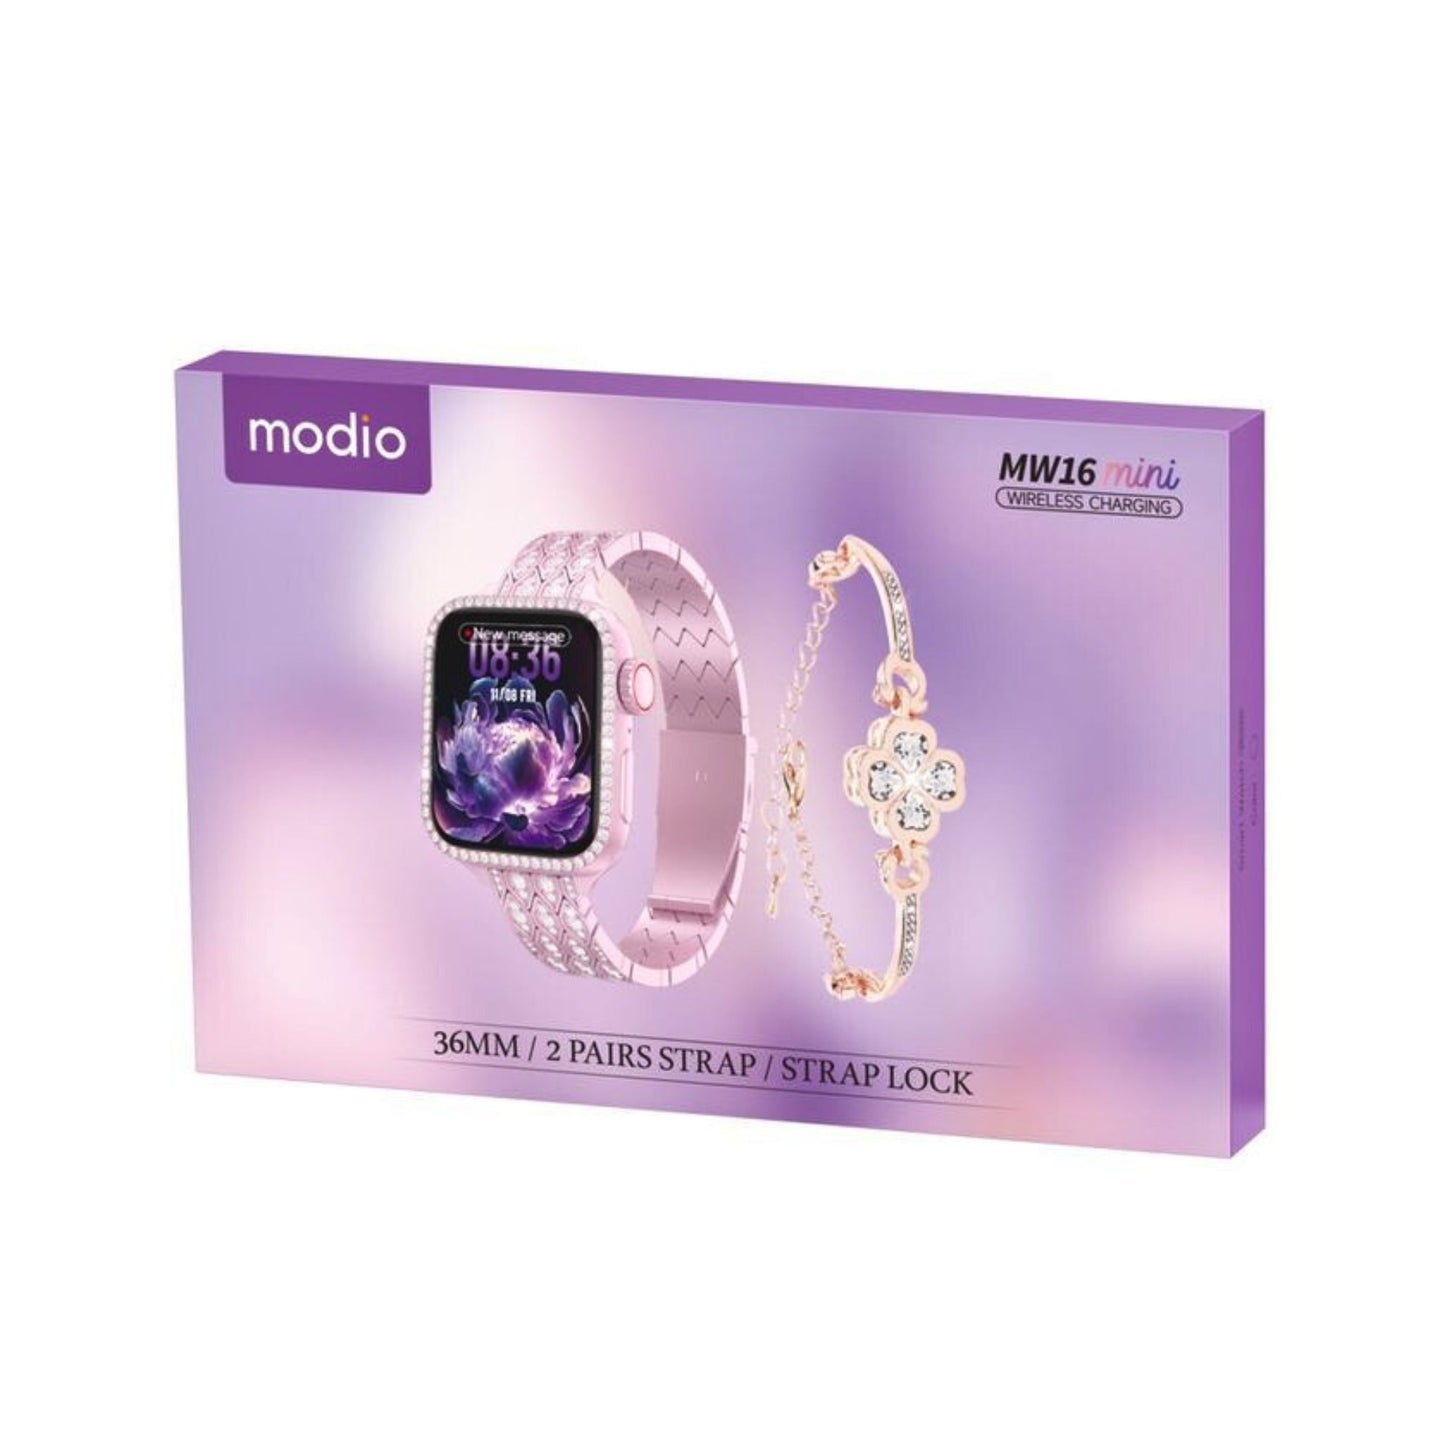 Modio MW16 Mini 36MM _Wireless Charging_2 Pair Strap Smartwatches_Pink